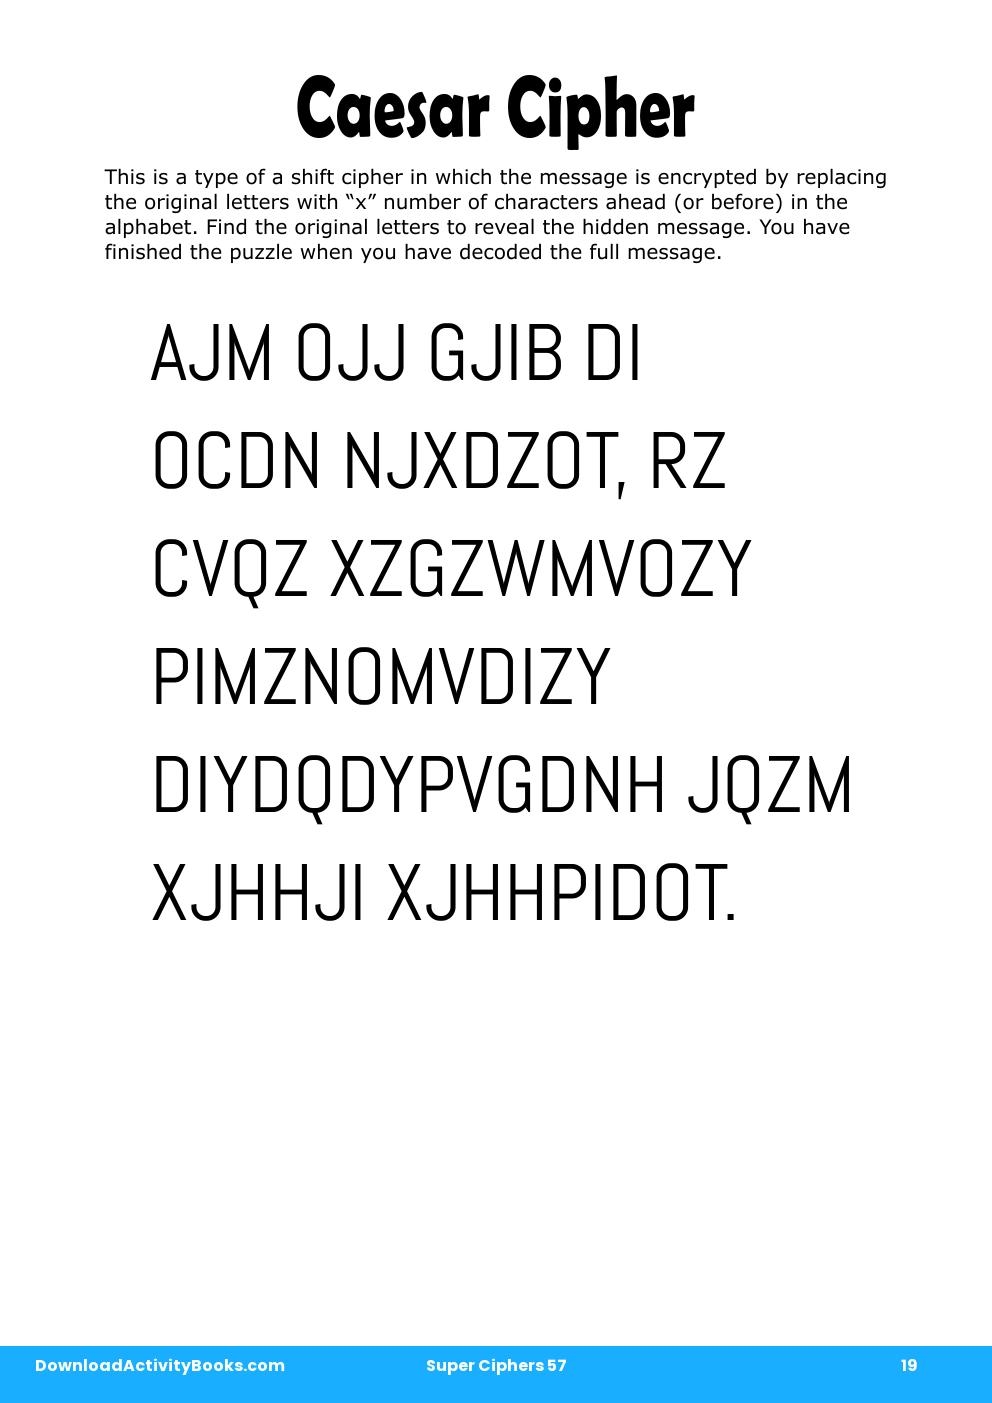 Caesar Cipher in Super Ciphers 57